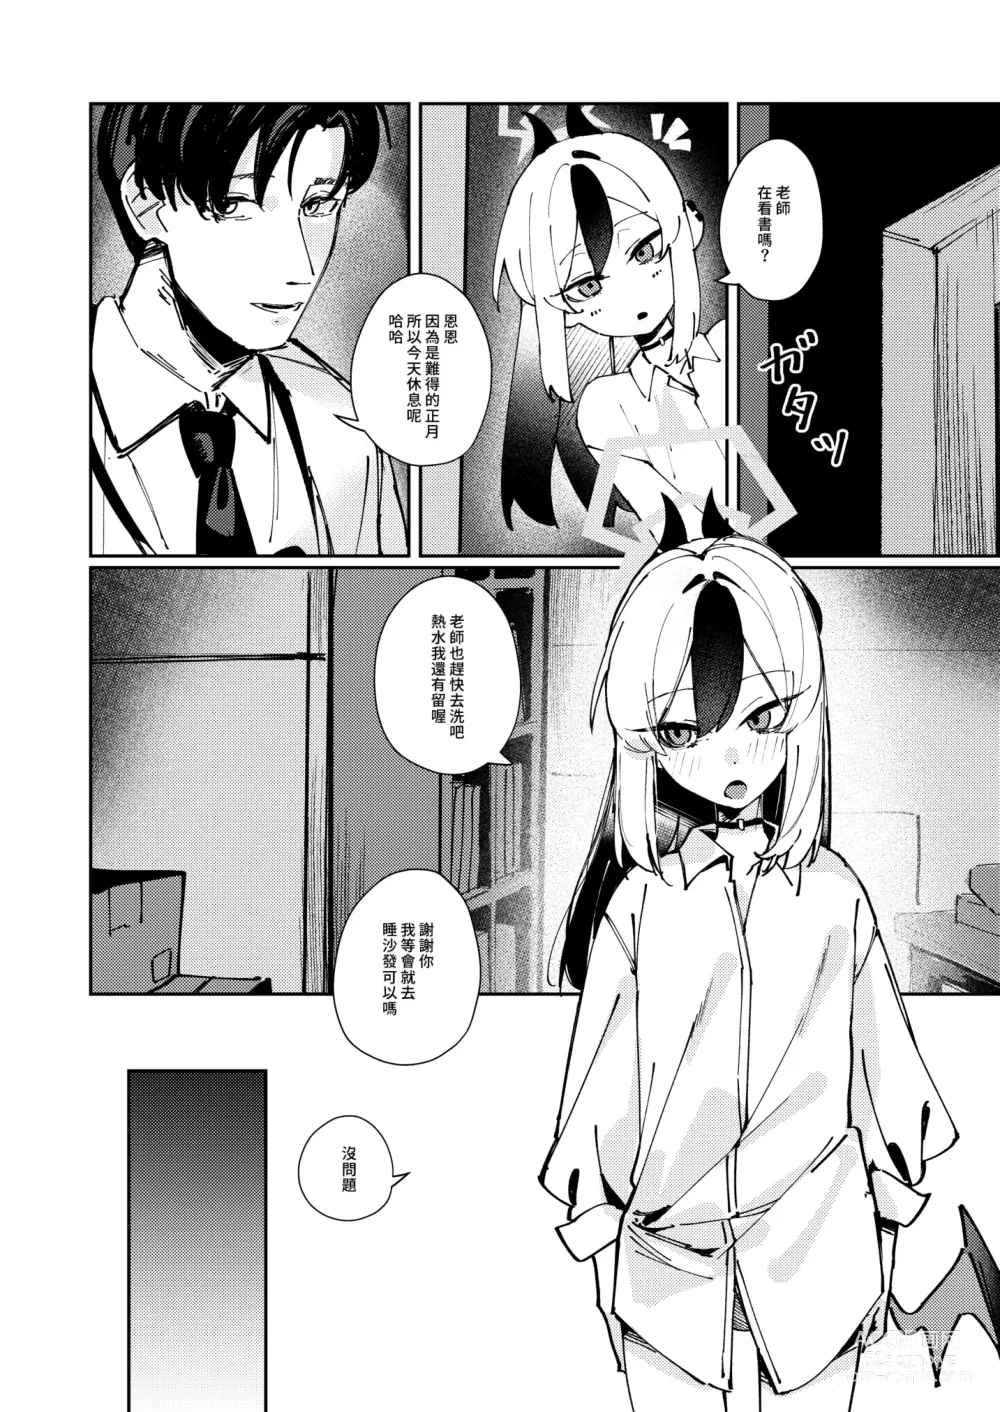 Page 8 of doujinshi 簡直就像戀人一樣